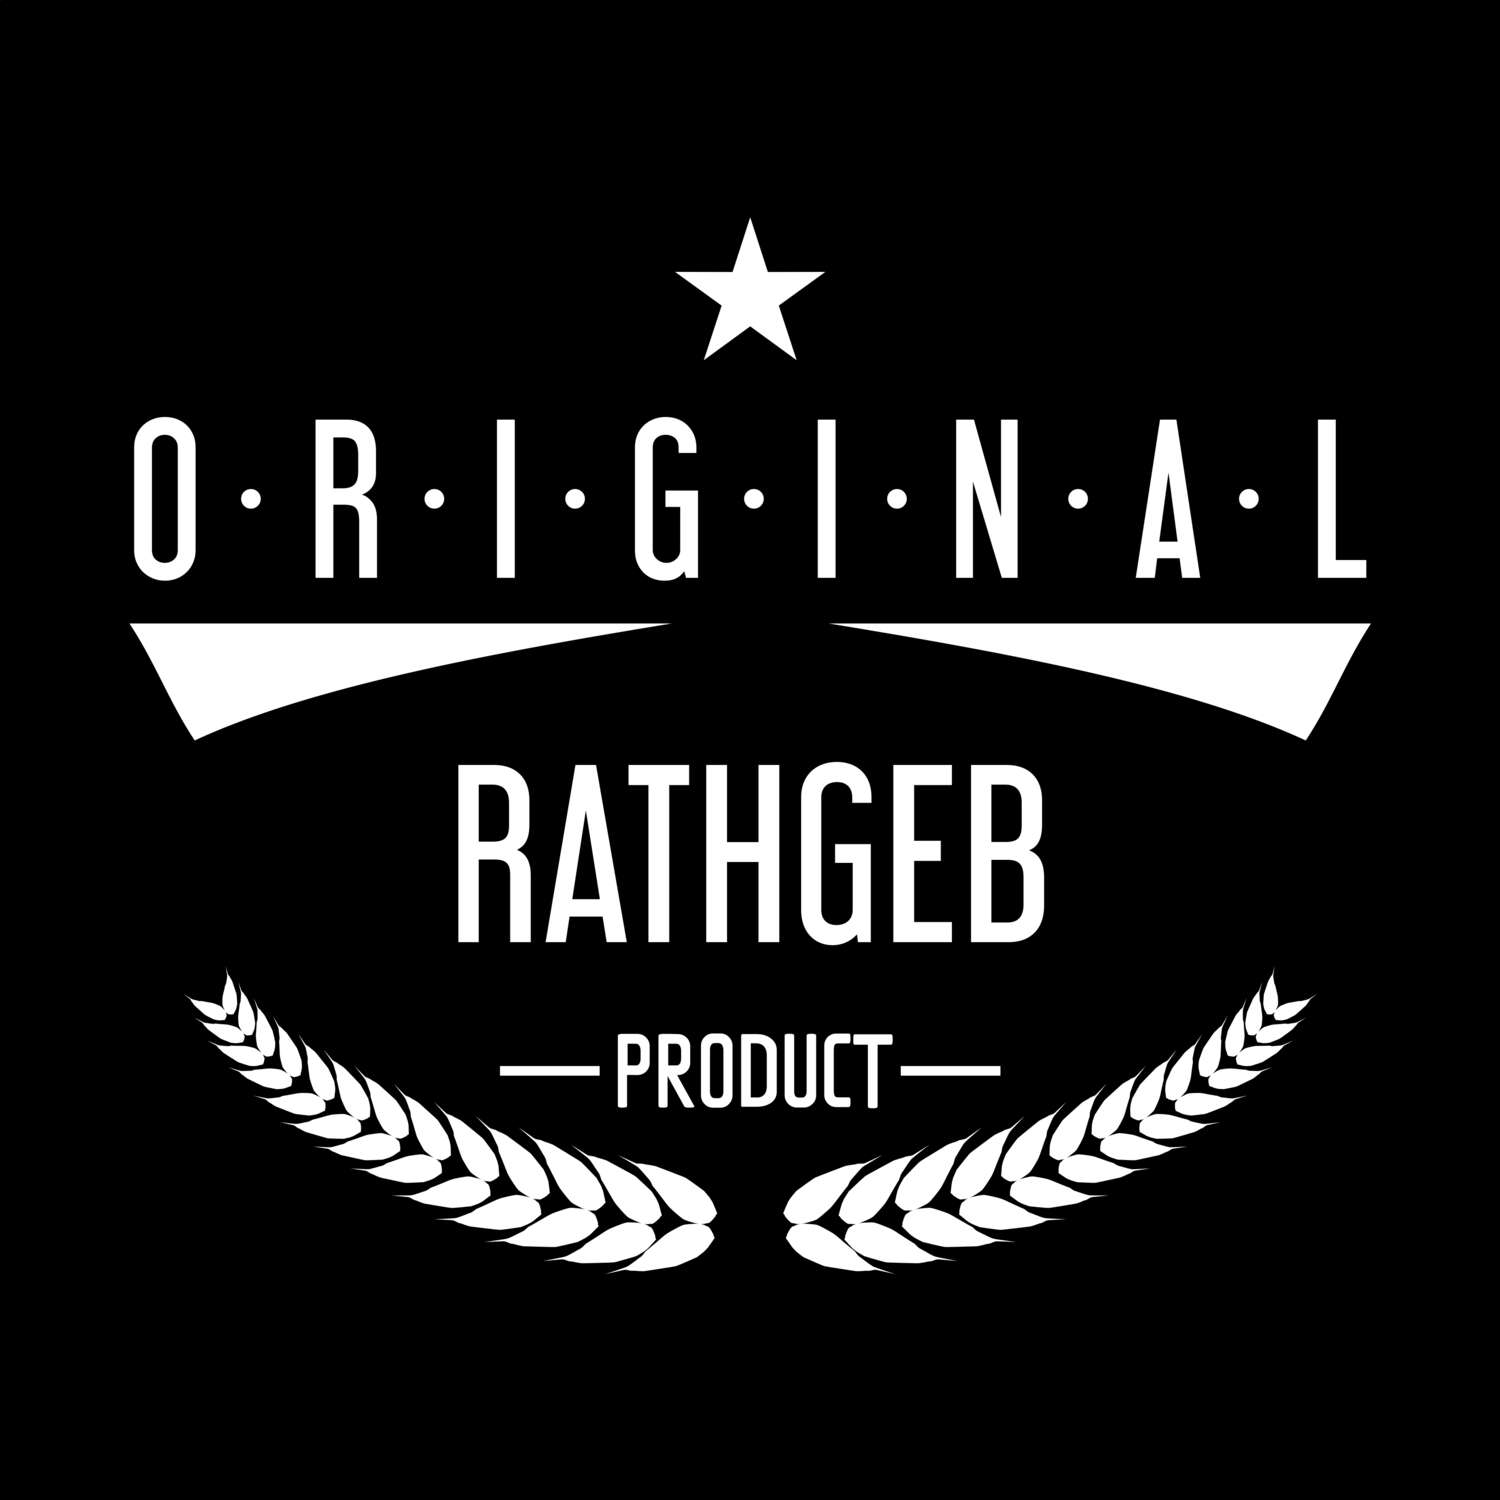 Rathgeb T-Shirt »Original Product«